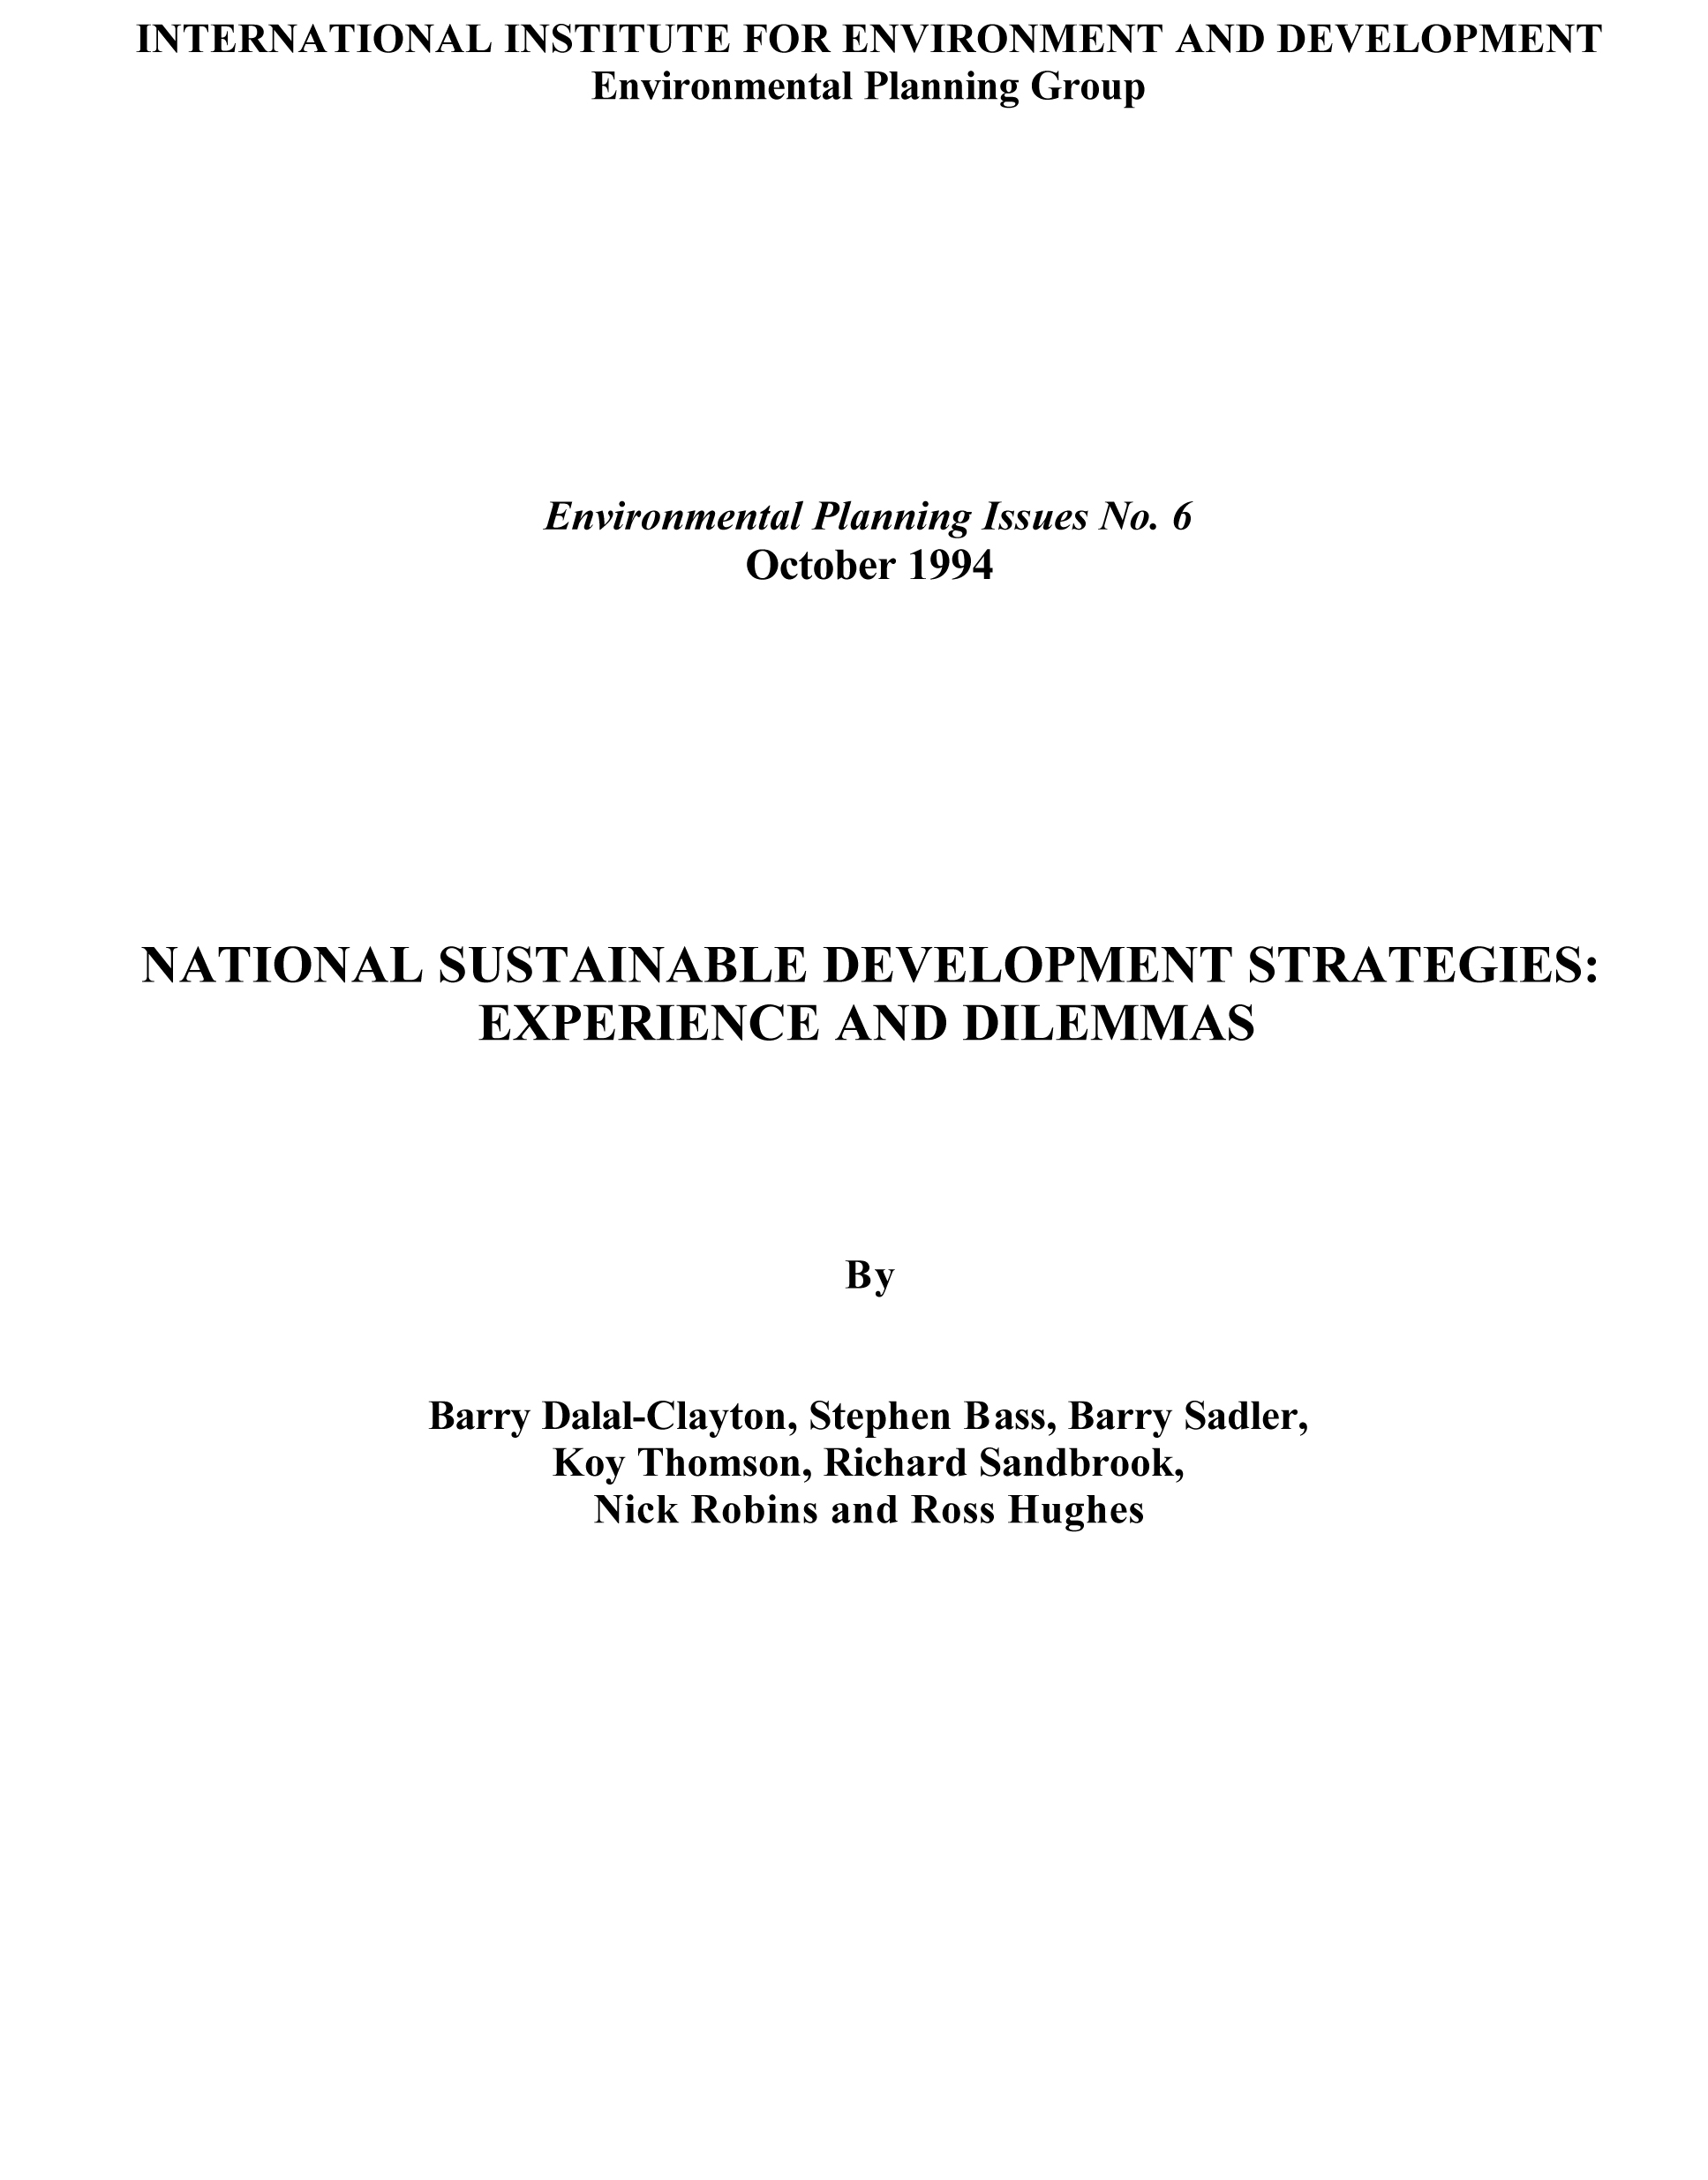 National SD Strategies-1